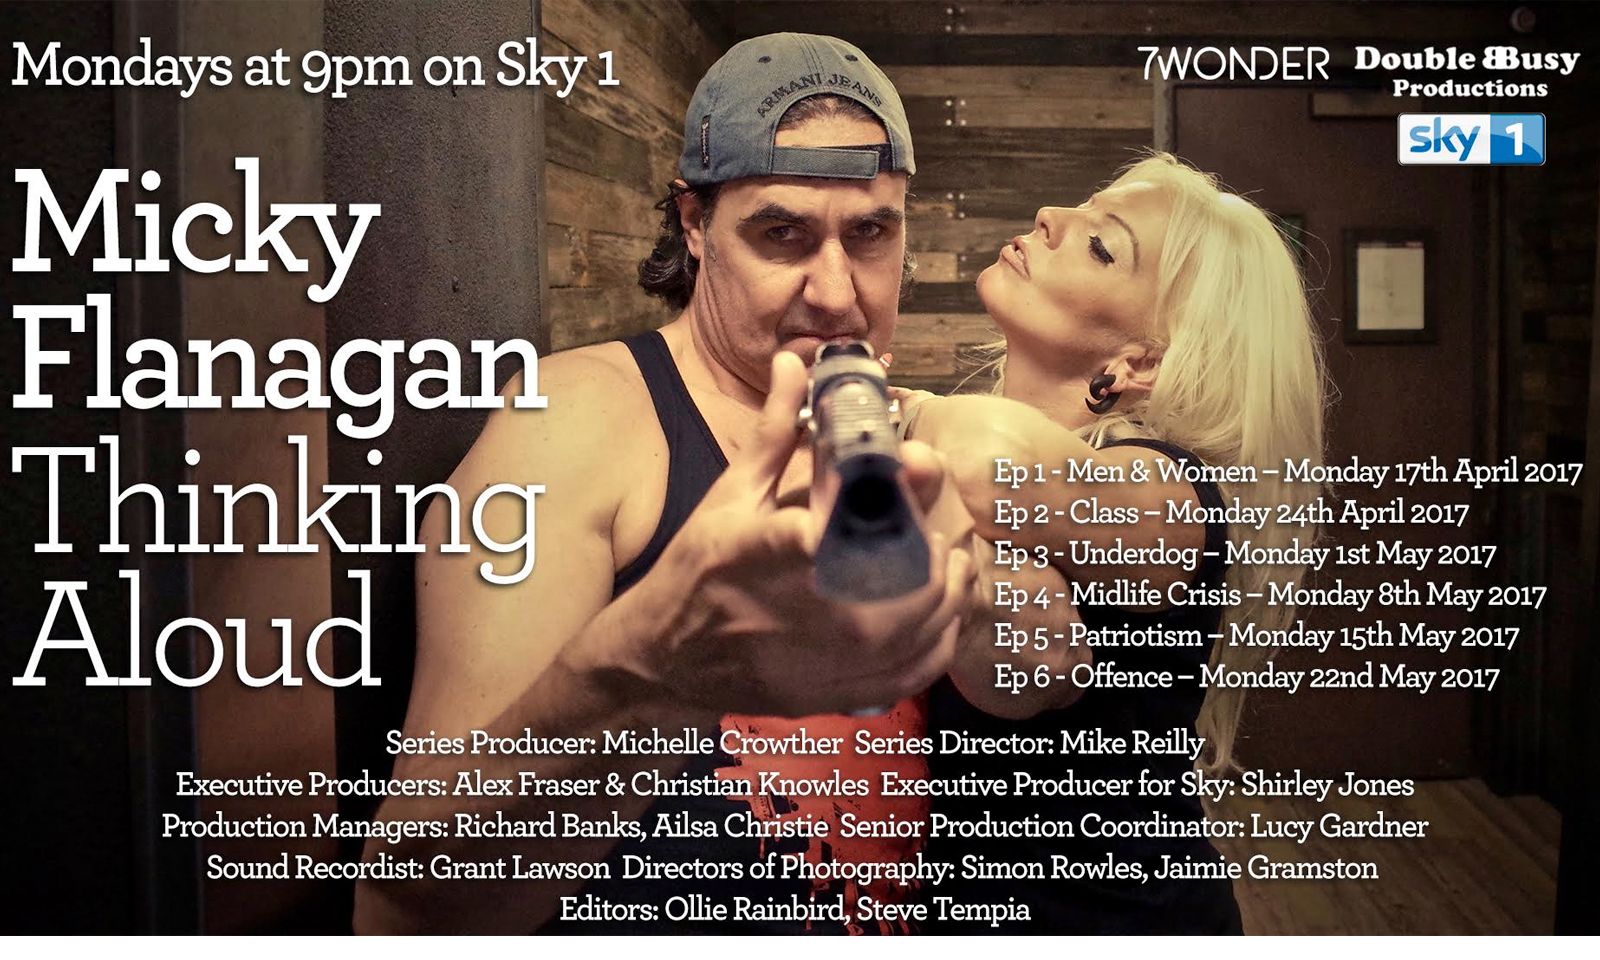 ‘Porno’ Dan Leal on Micky Flanagan’s ‘Thinking Aloud’ on Sky 1